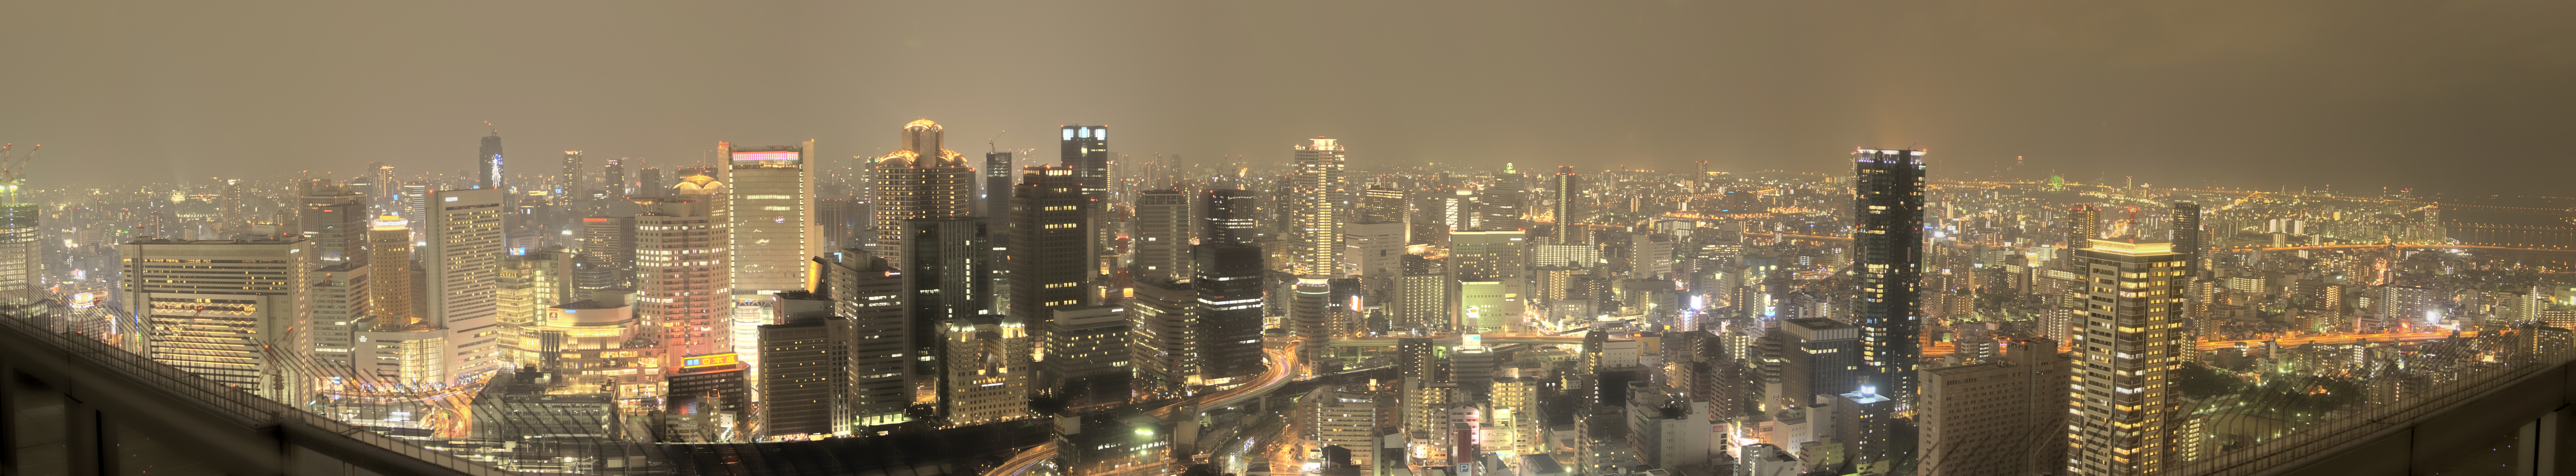 Osaka skyline at night from Umeda Sky Building.jpg